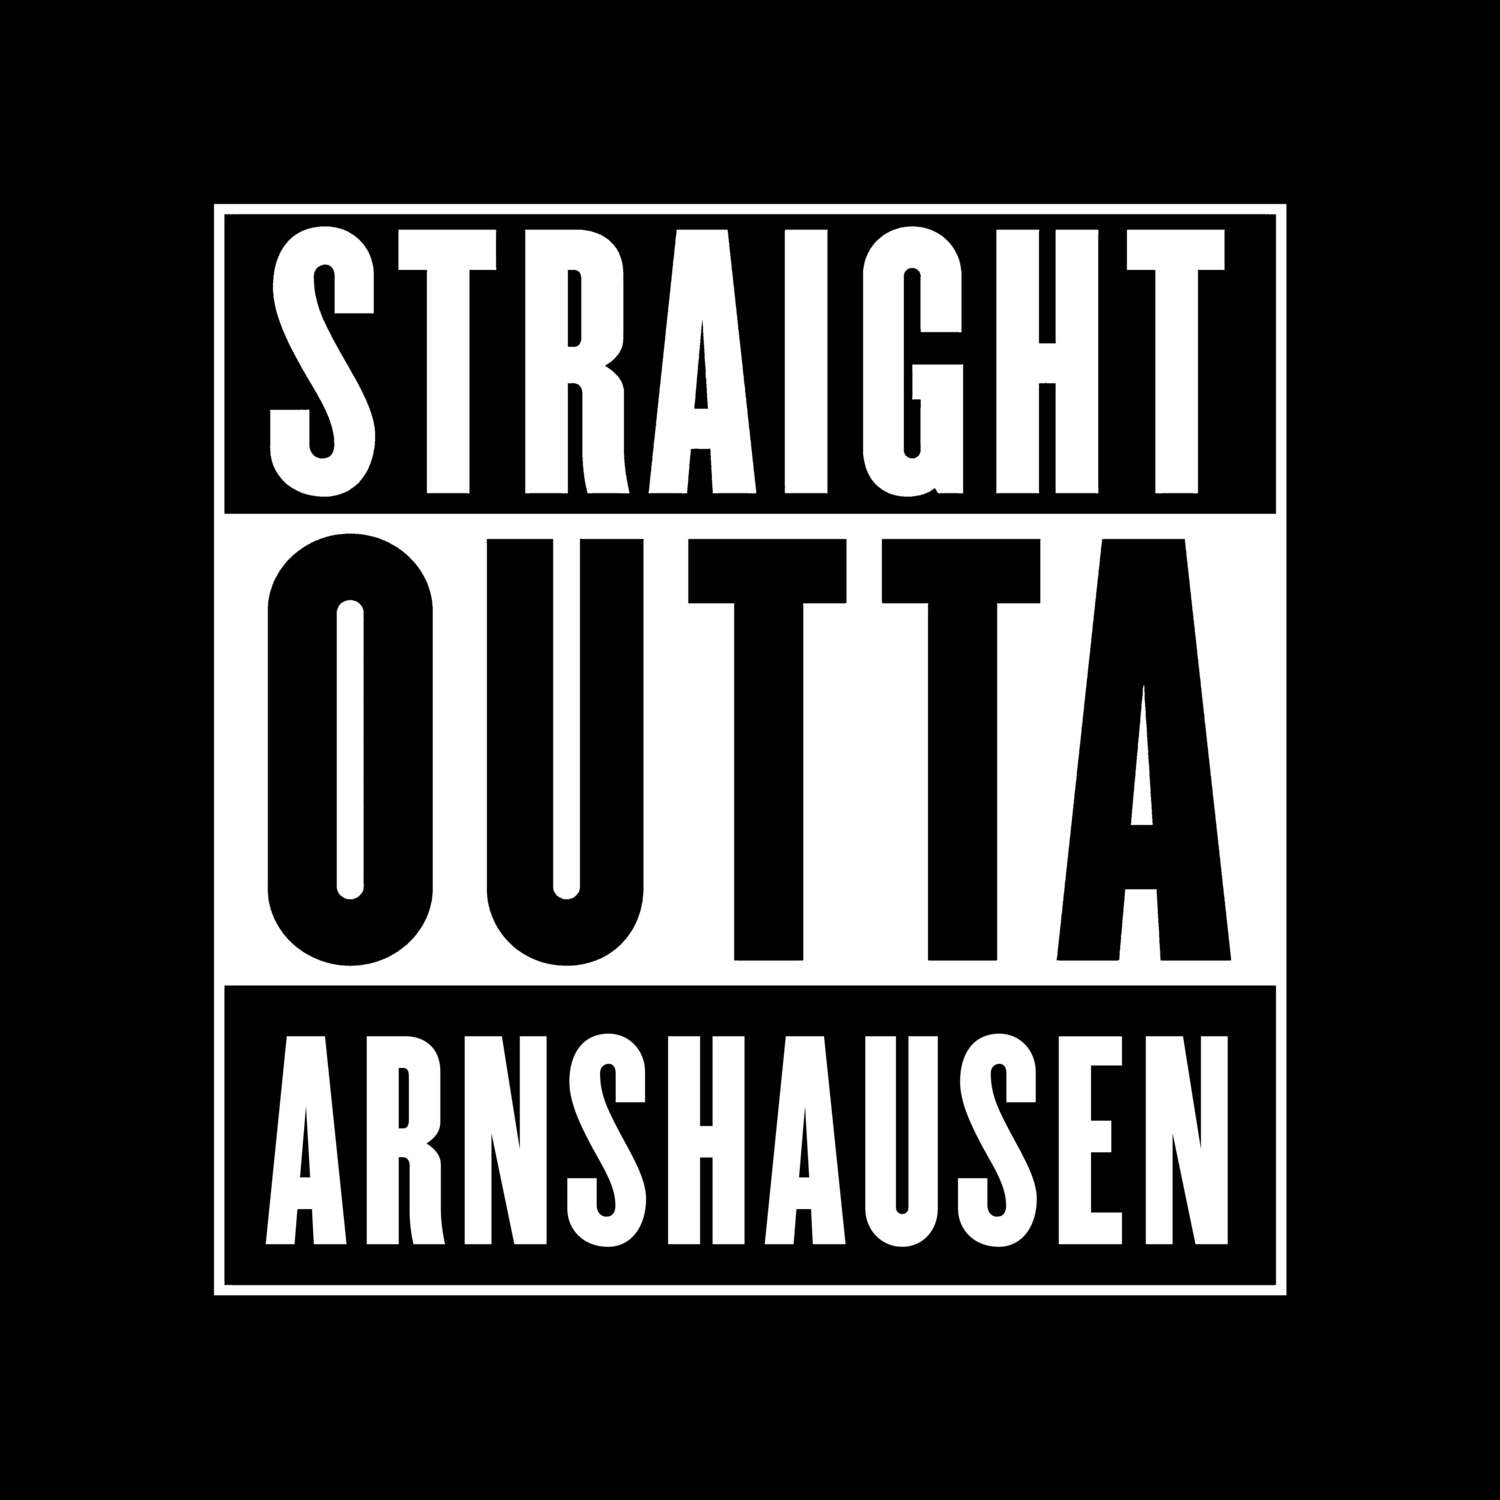 Arnshausen T-Shirt »Straight Outta«